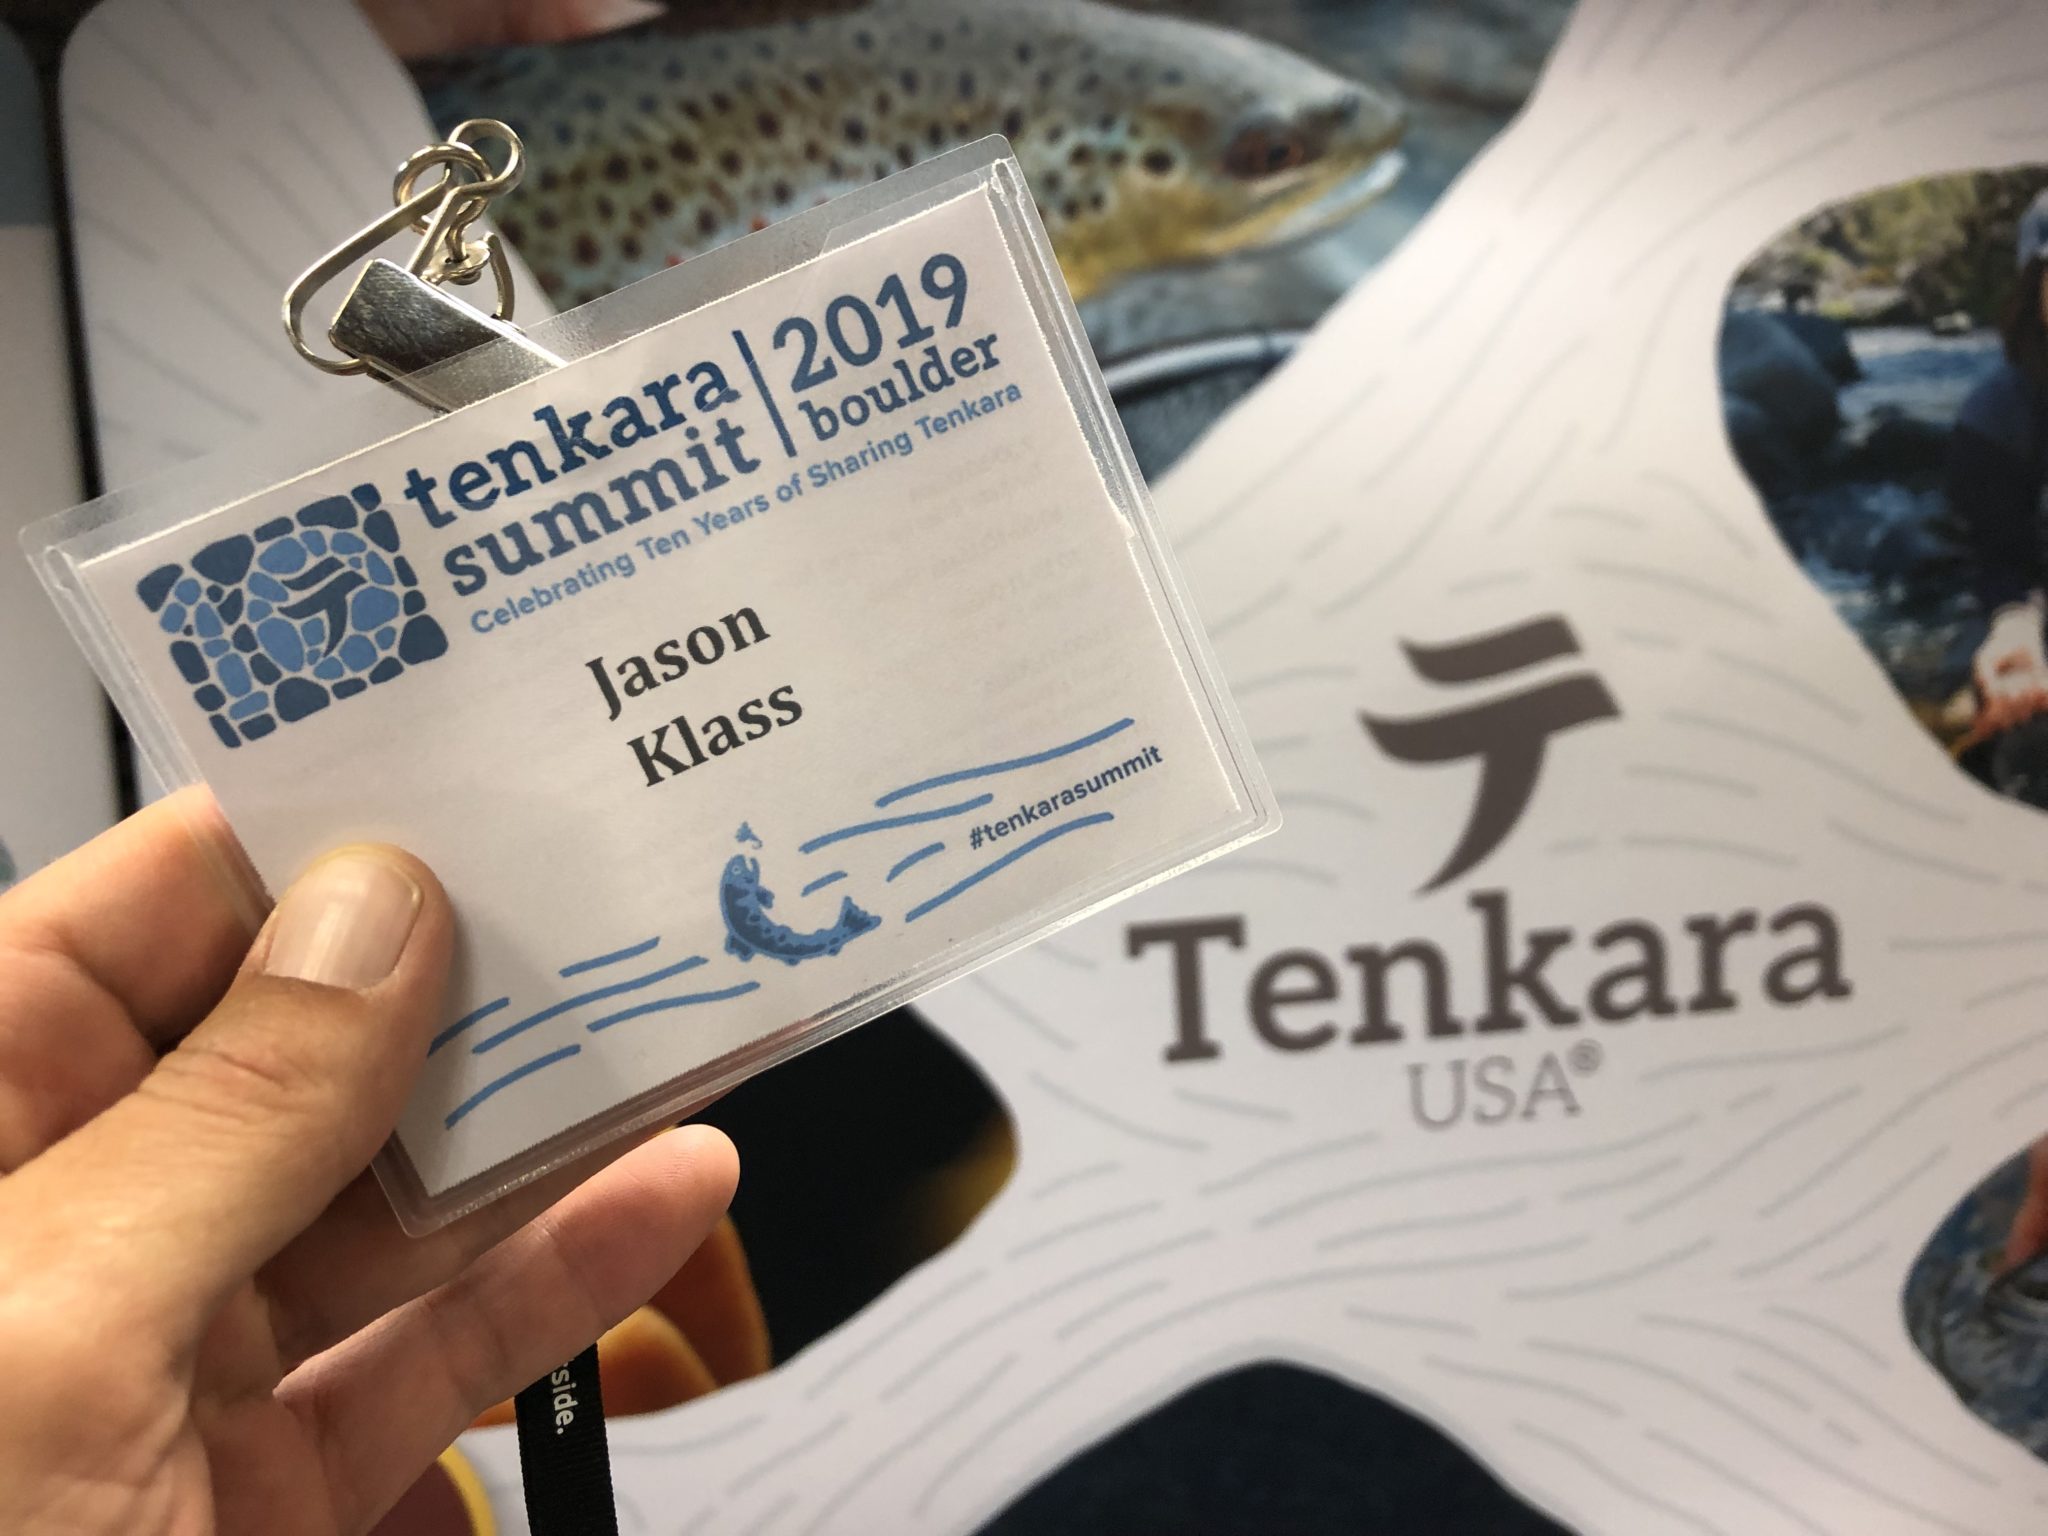 Tenkara Summit 2019